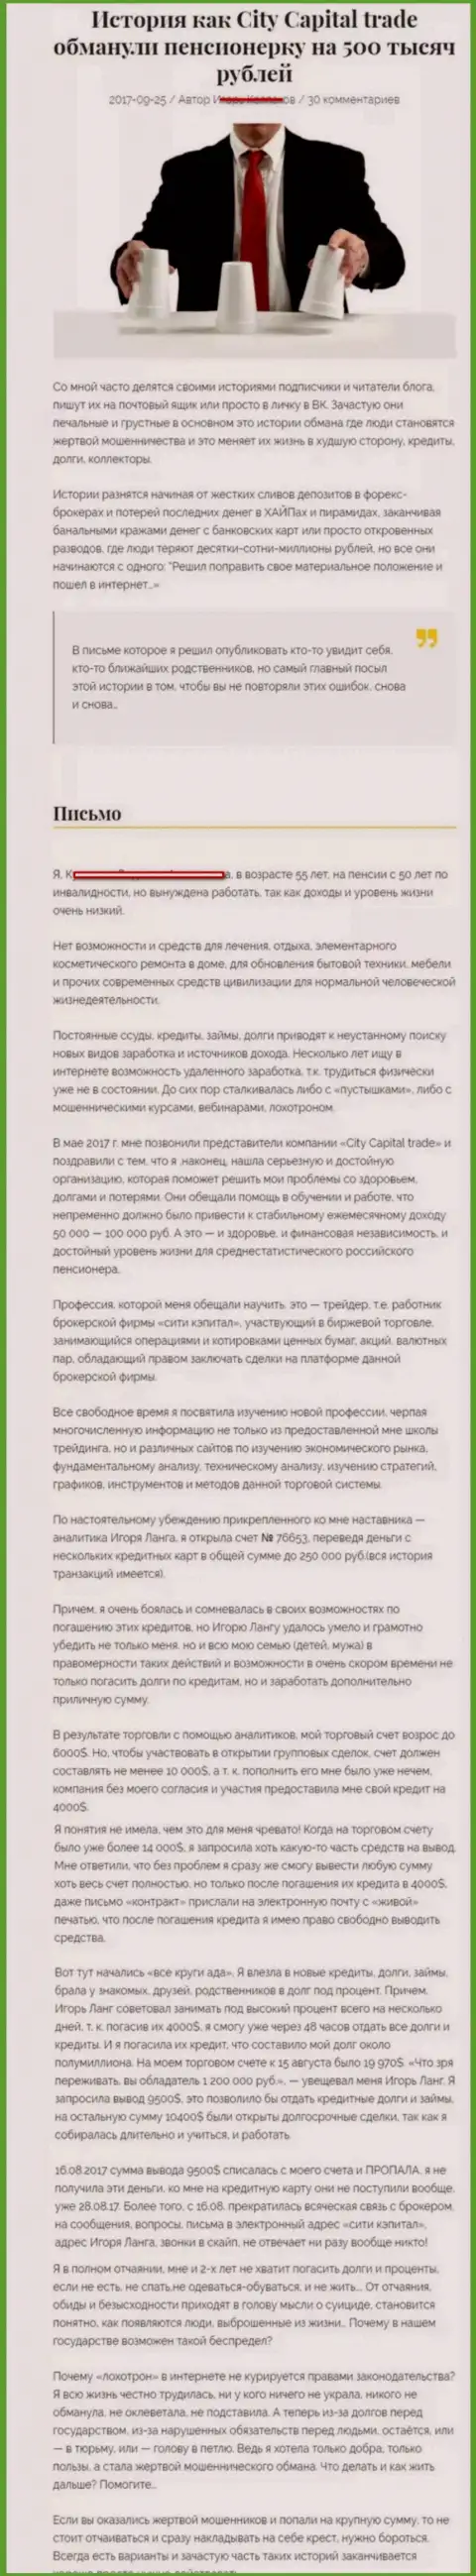 City Capital Trade обули пенсионерку - инвалида на 500 000 руб. - МАХИНАТОРЫ !!!